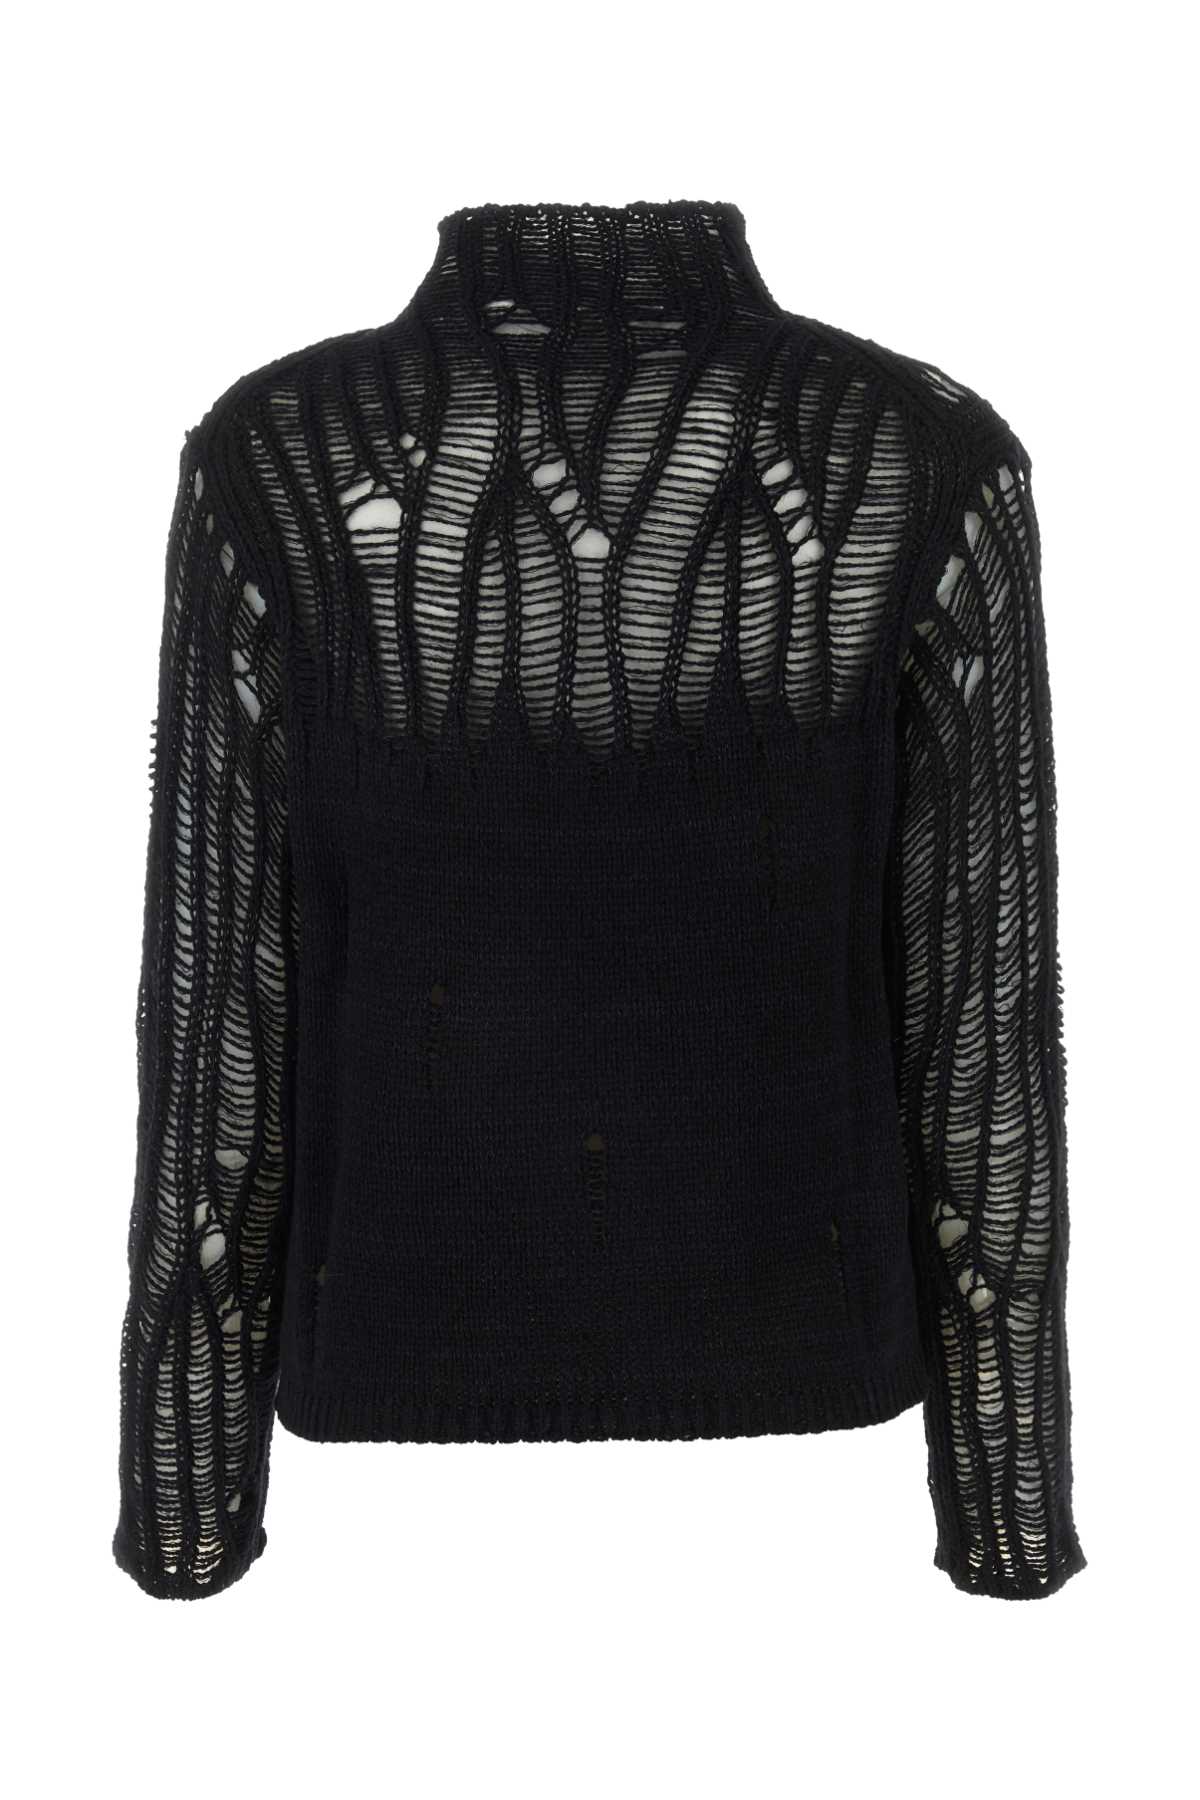 Chloé Black Wool Blend Sweater